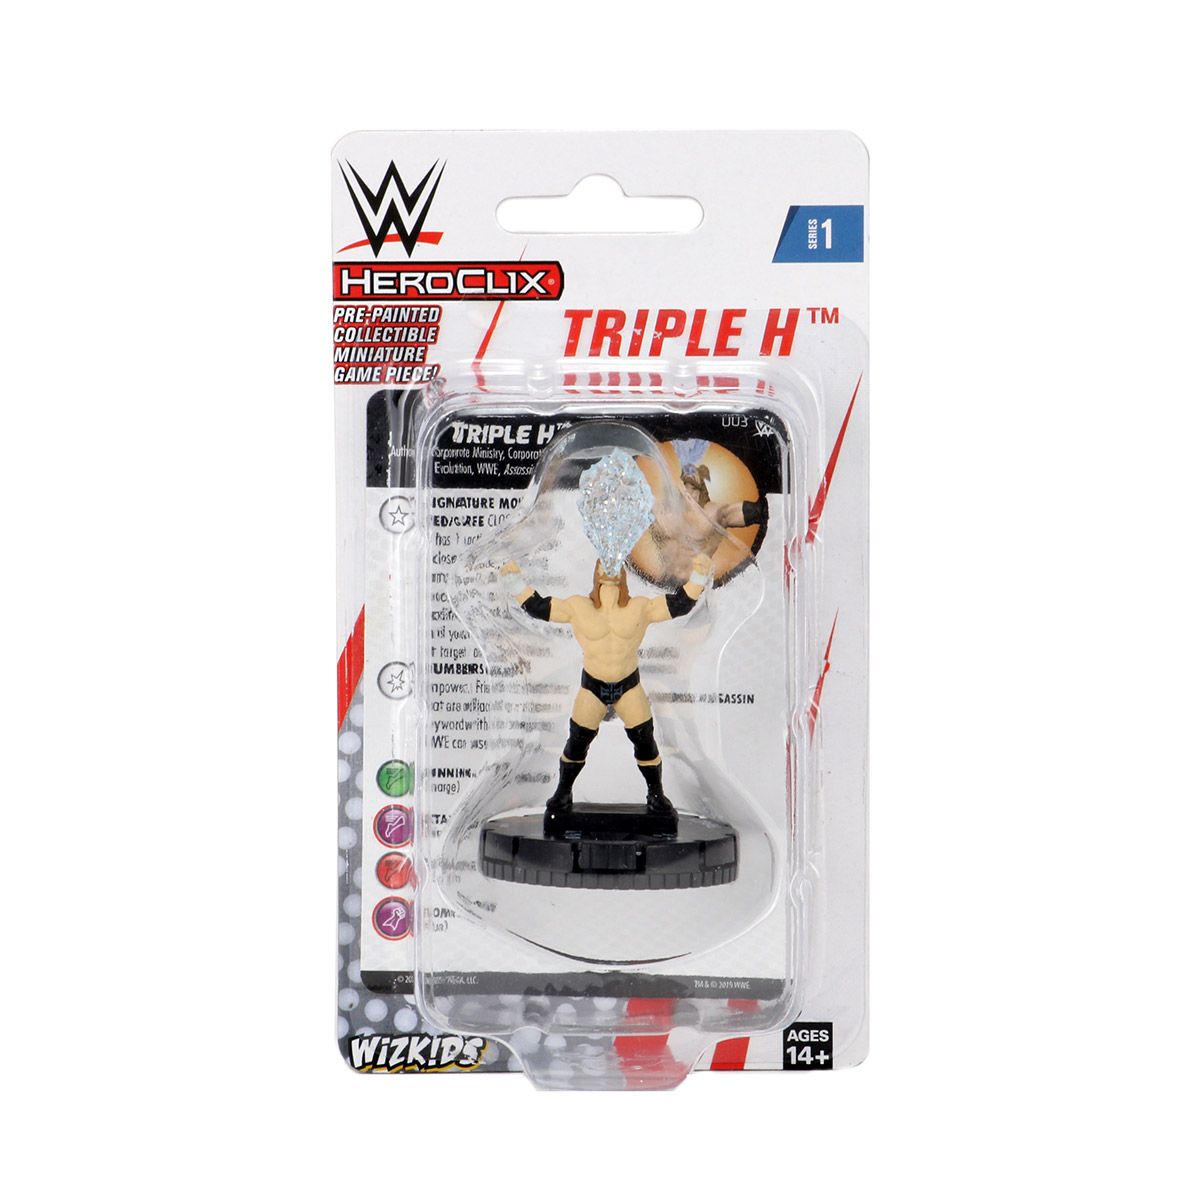 Triple H Wizkids Wrestling Miniature Gaming WWE HeroClix Expansion Pack 